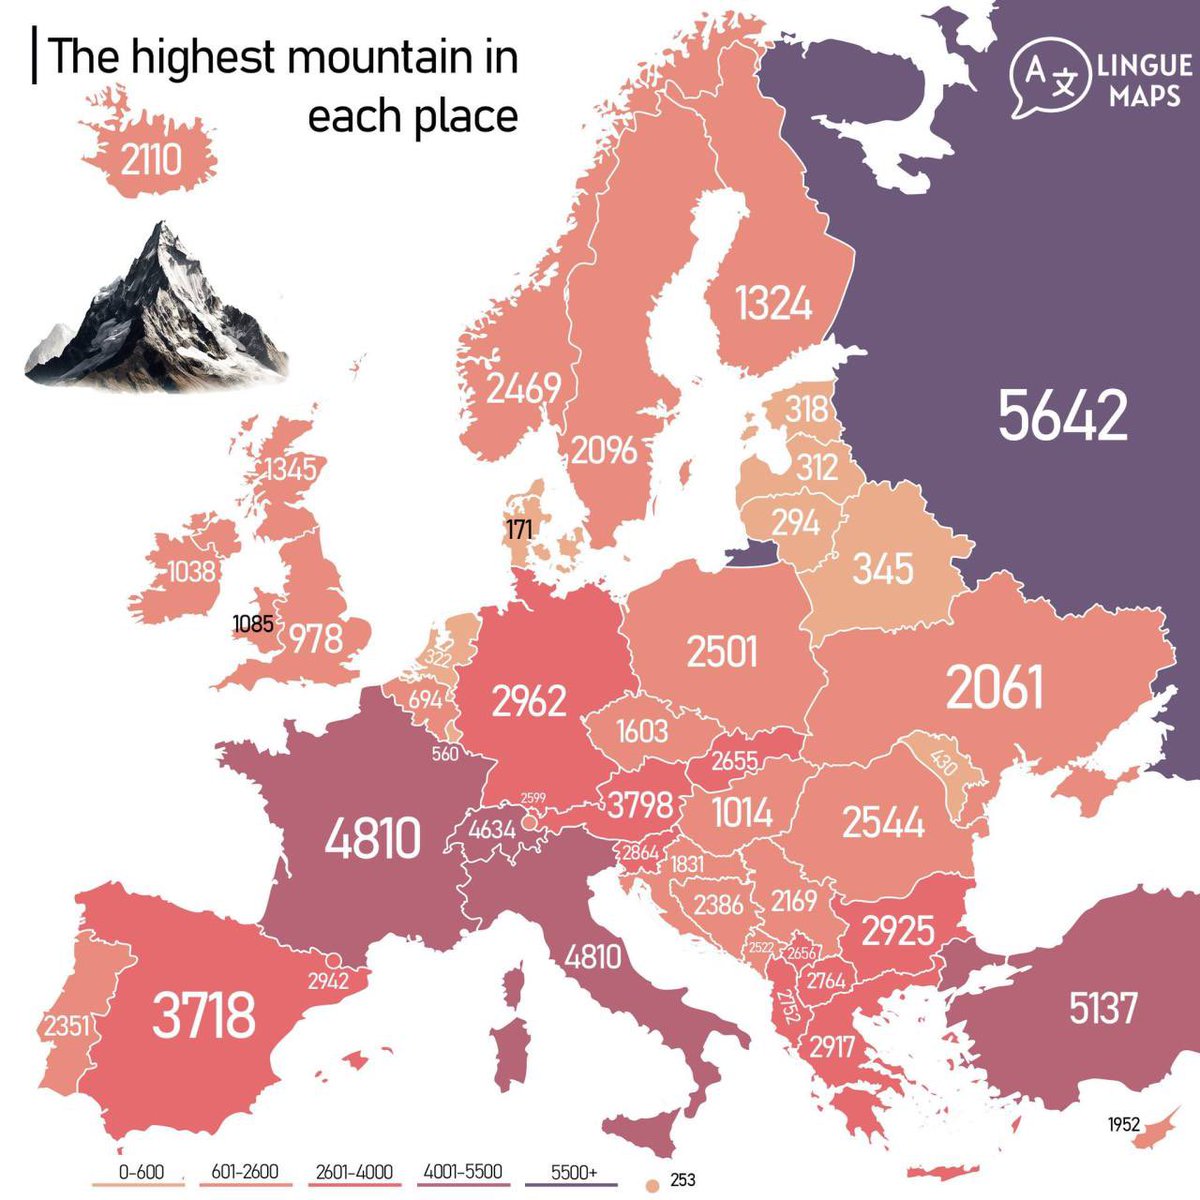 The highest mountain in each European country.

🇷🇺 Mount Elbrus - 5,642 meters
🇮🇹🇫🇷 Mont Collon - 4,810 meters
🇨🇭🇮🇹 Dufourspitze - 4,634 meters